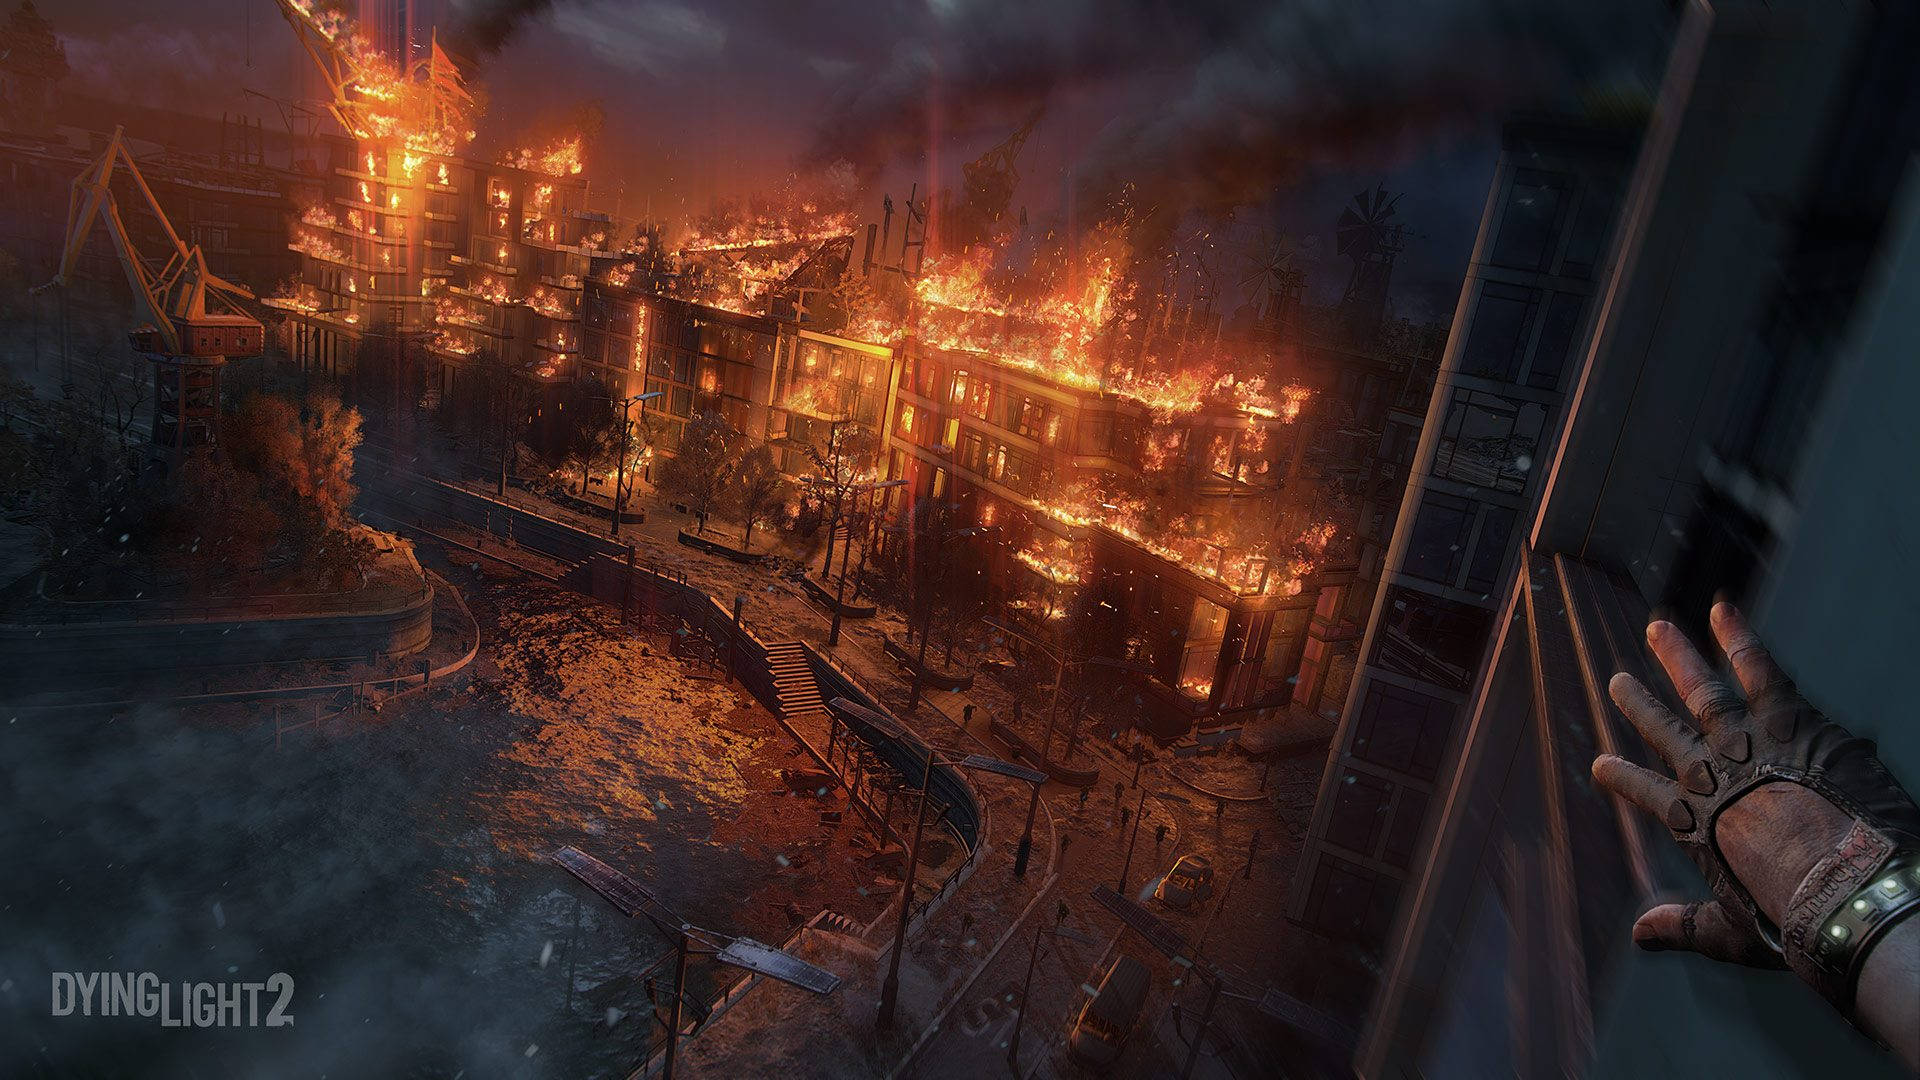 Dying Light 2: Stunning Image Of A Burning City